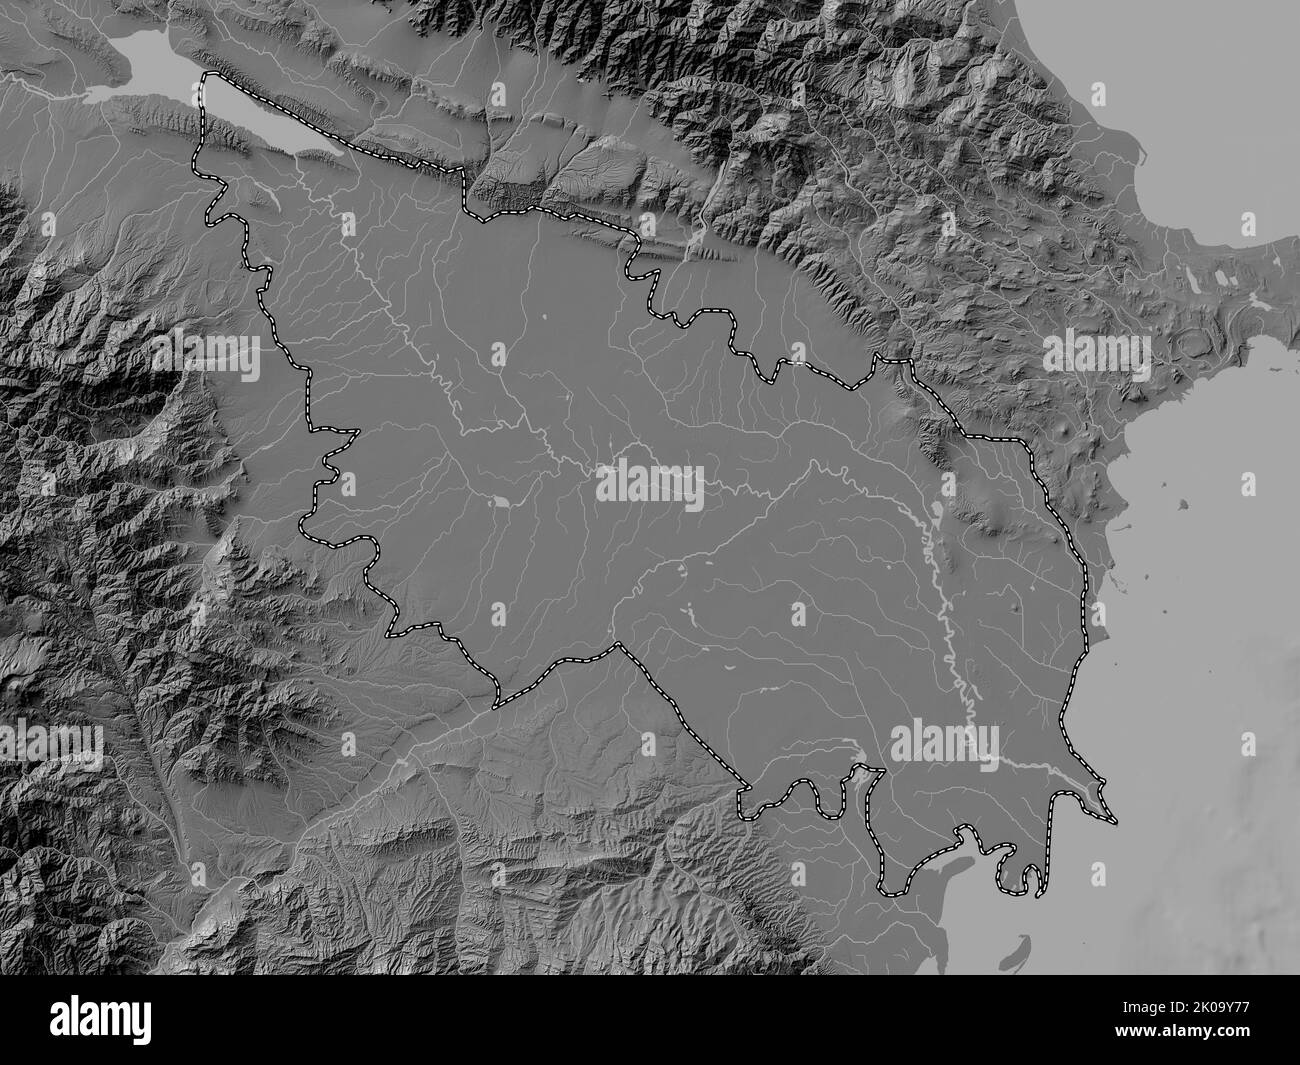 Aran, region of Azerbaijan. Bilevel elevation map with lakes and rivers Stock Photo